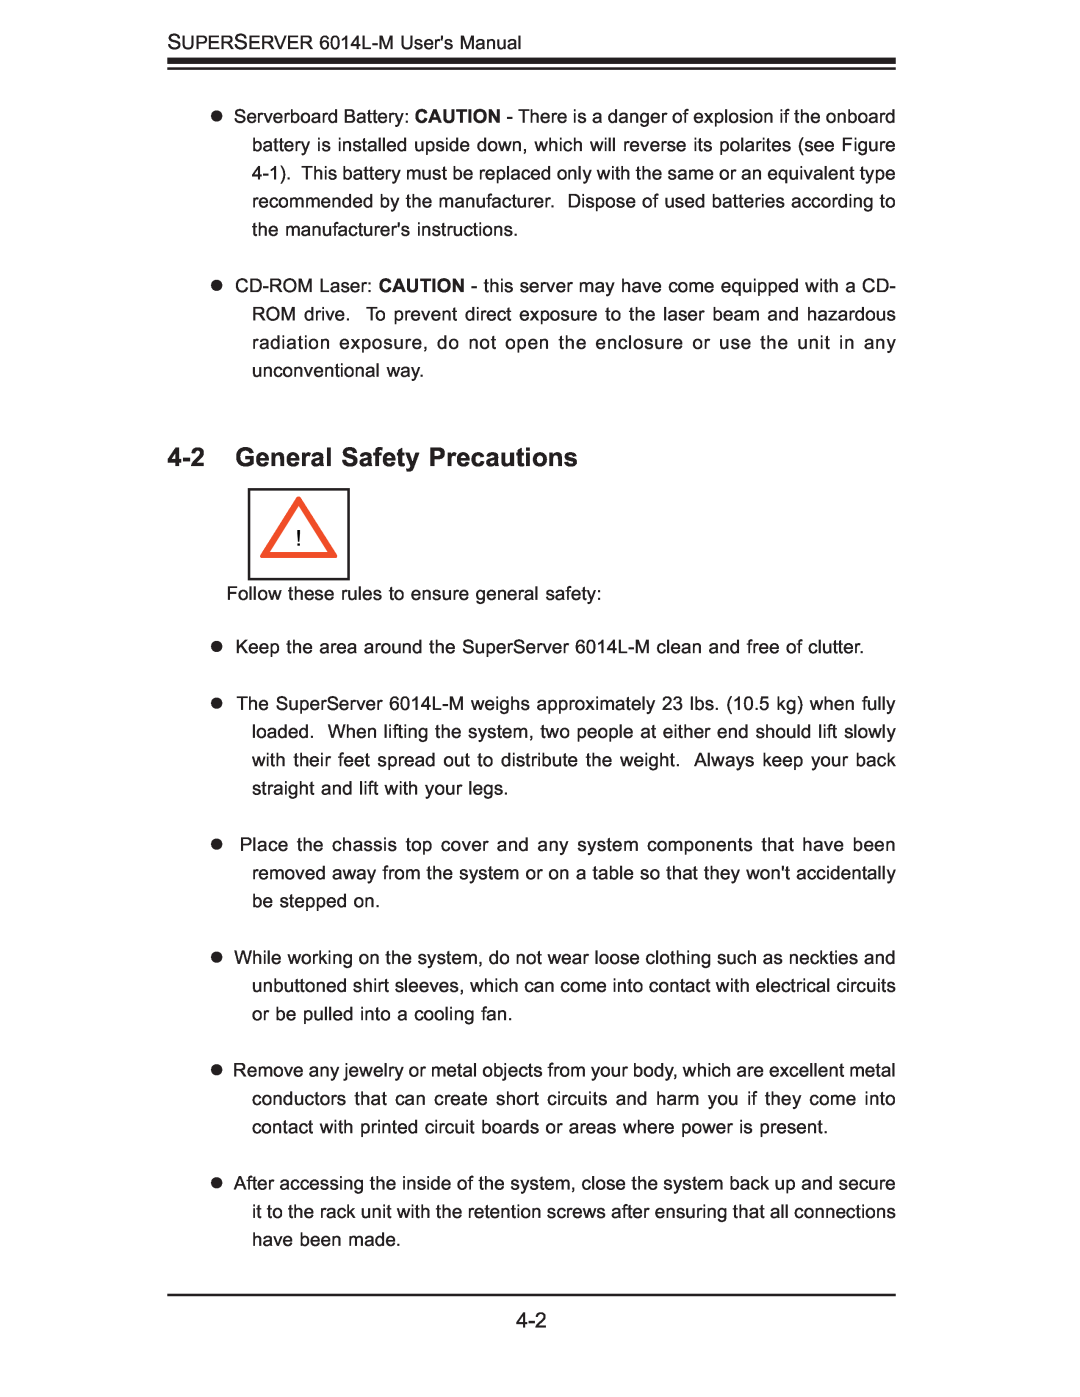 SUPER MICRO Computer 6014L-M manual General Safety Precautions 